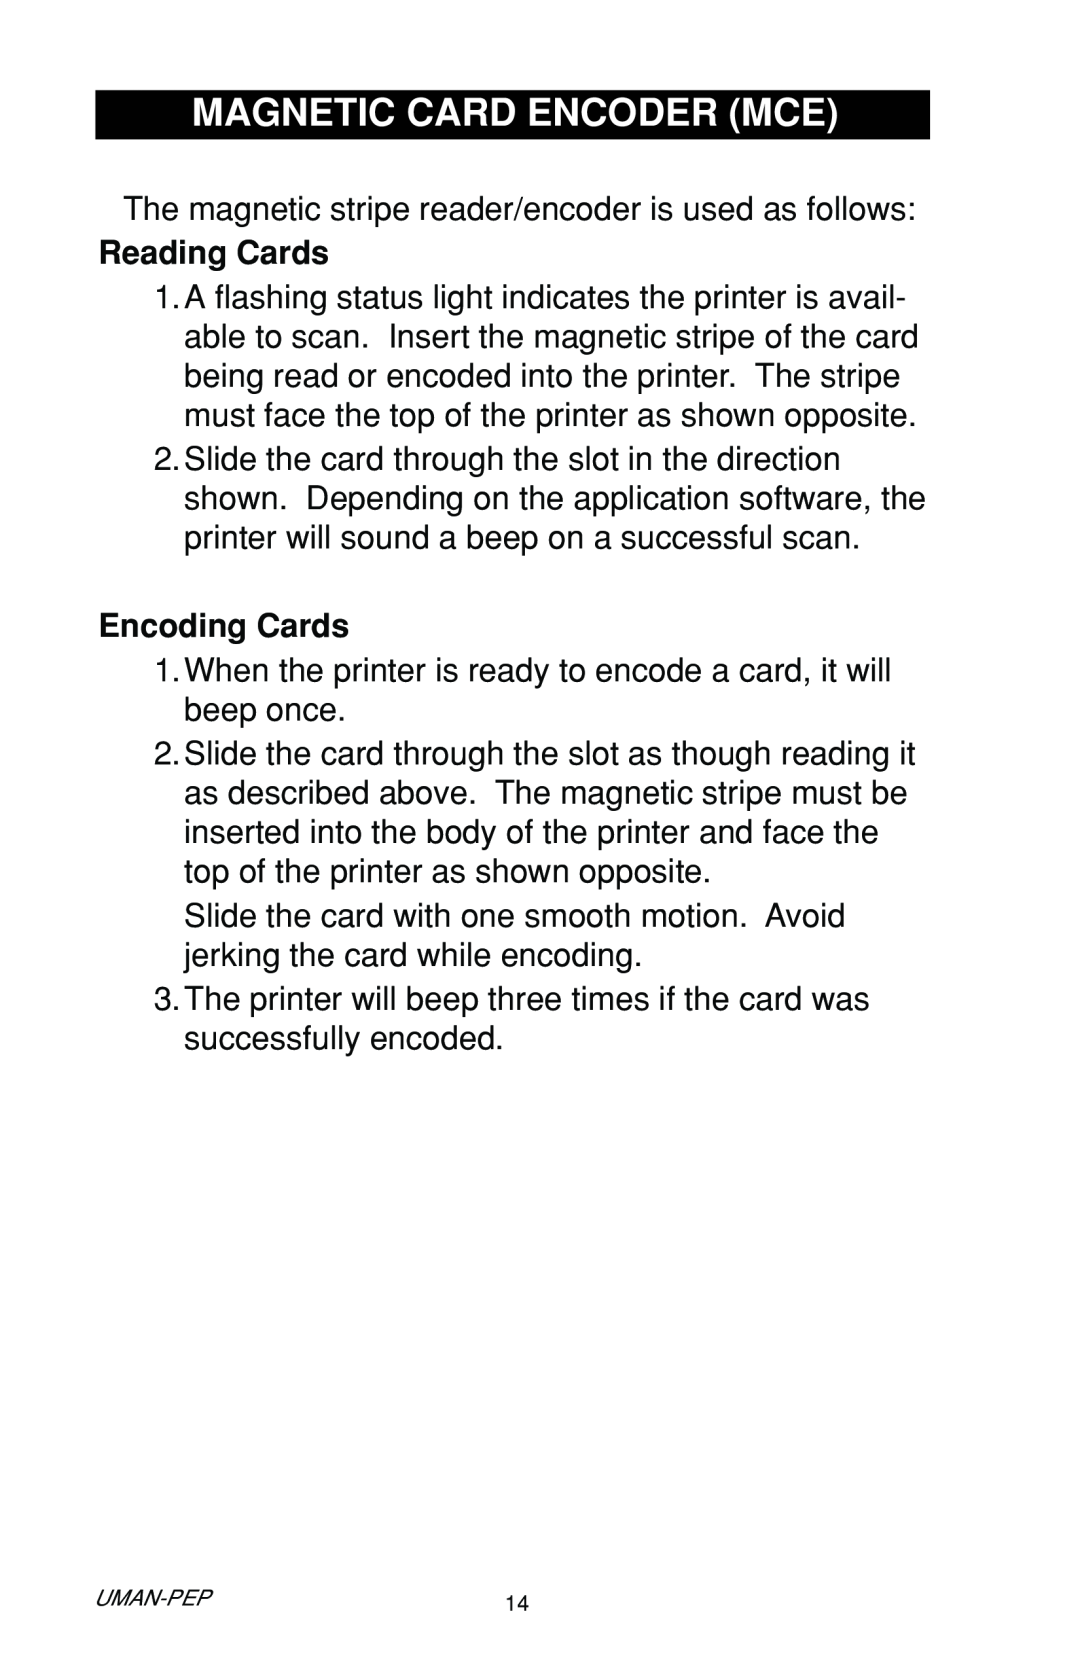 Zebra Technologies Portable Encoding Printer user manual Magnetic Card Encoder Mce, Reading Cards, Encoding Cards 